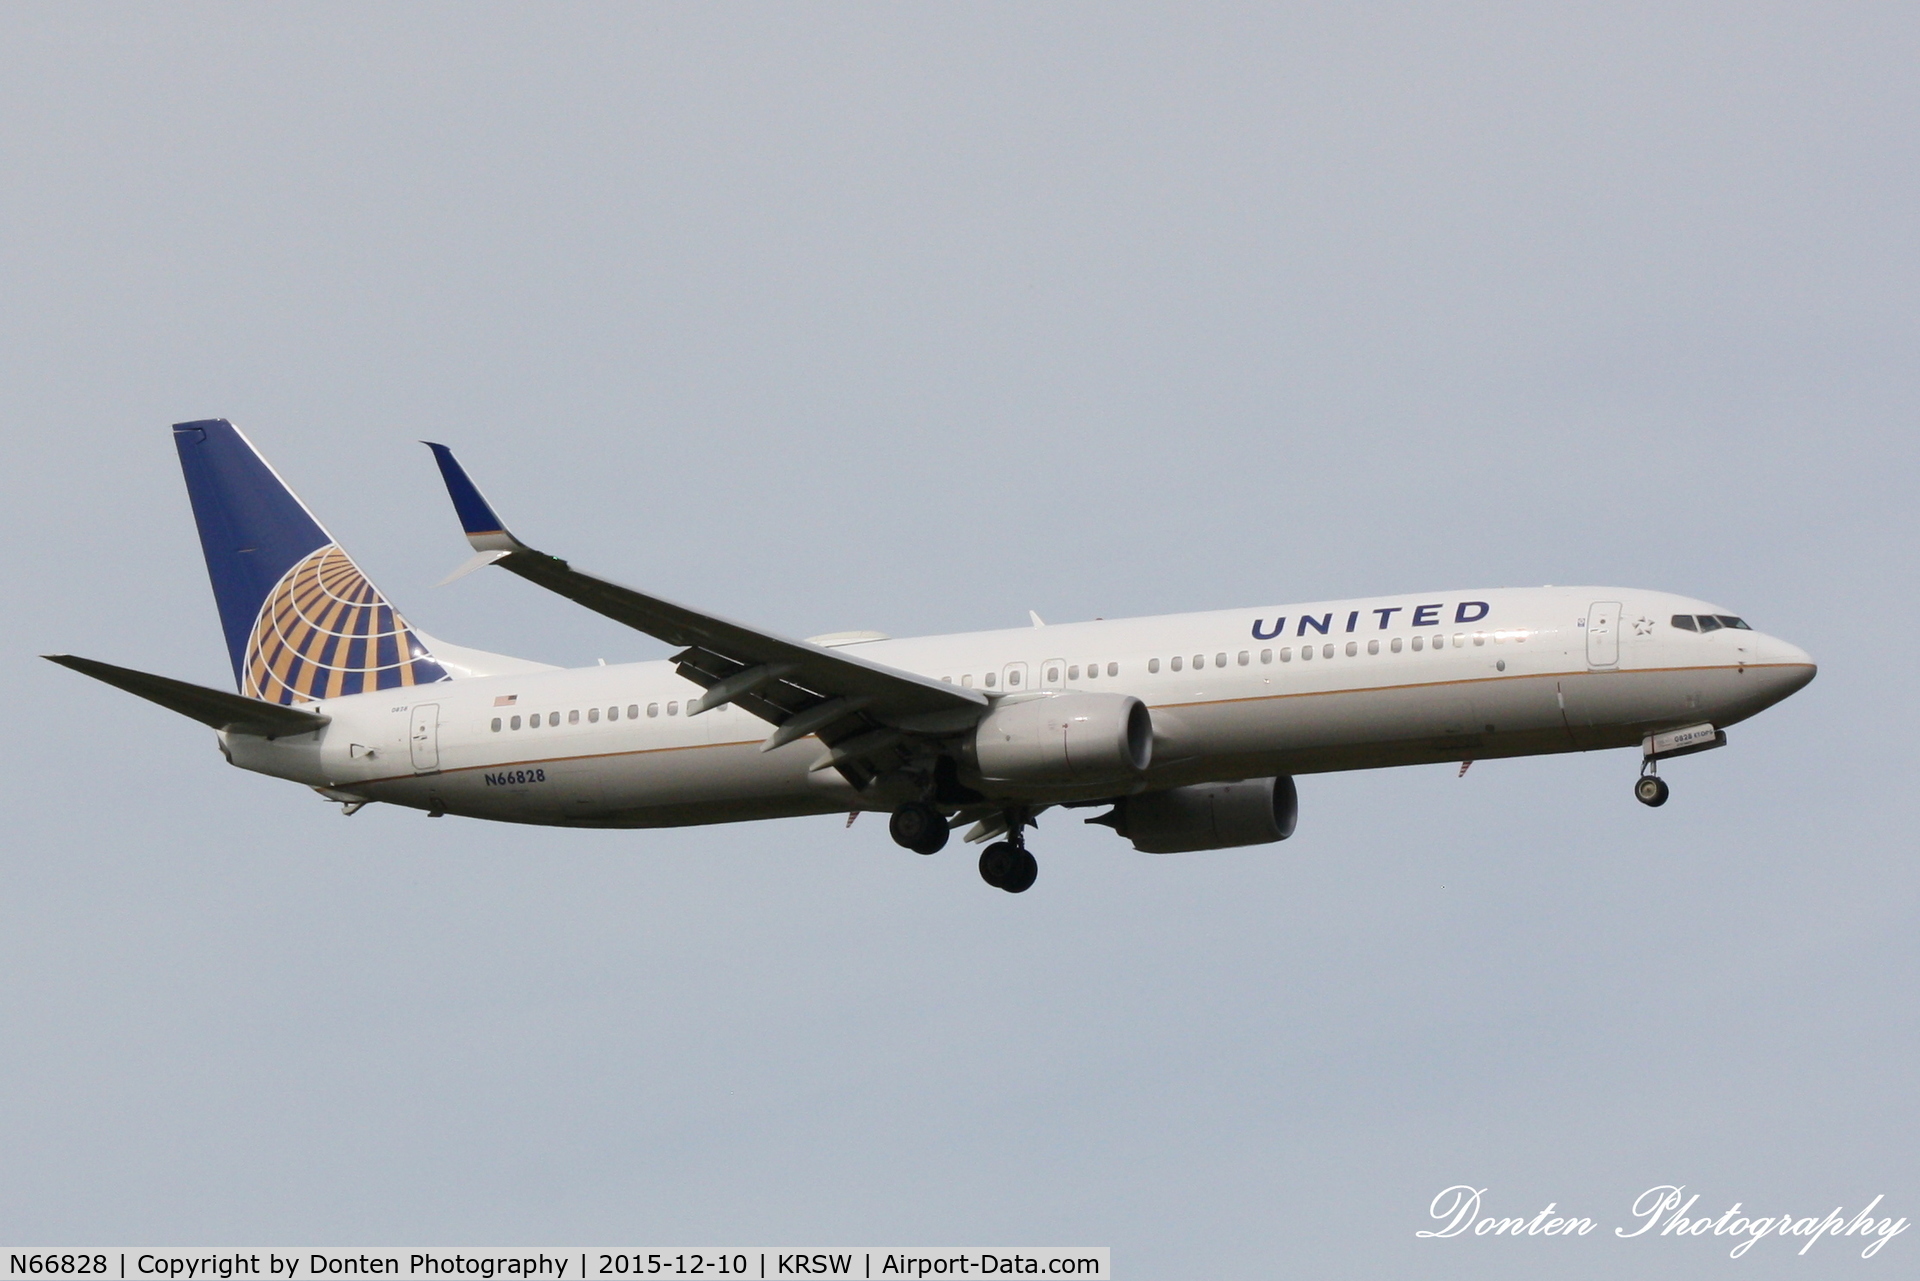 N66828, 2014 Boeing 737-924/ER C/N 44580, United Flight 665 (N66828) arrives at Southwest Florida International Airport following flight from Chicago-O'Hare International Airport